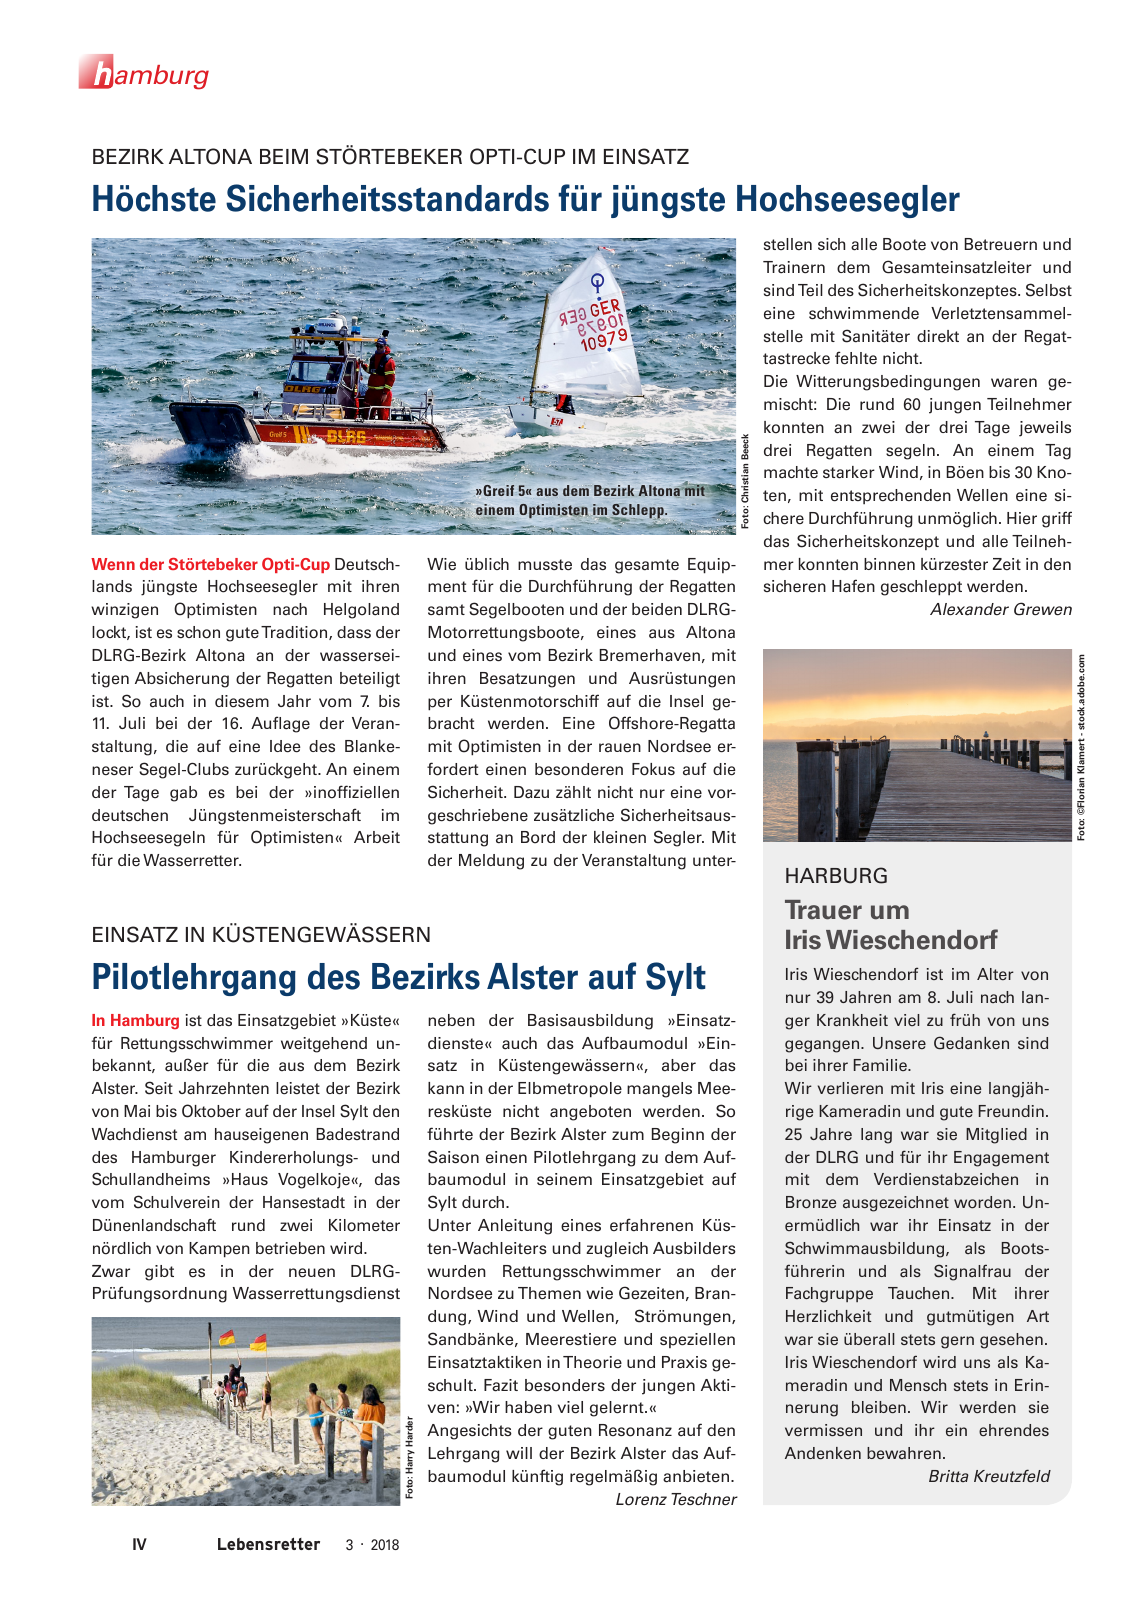 Vorschau Lebensretter 3/2018 - Regionalausgabe Hamburg Seite 6